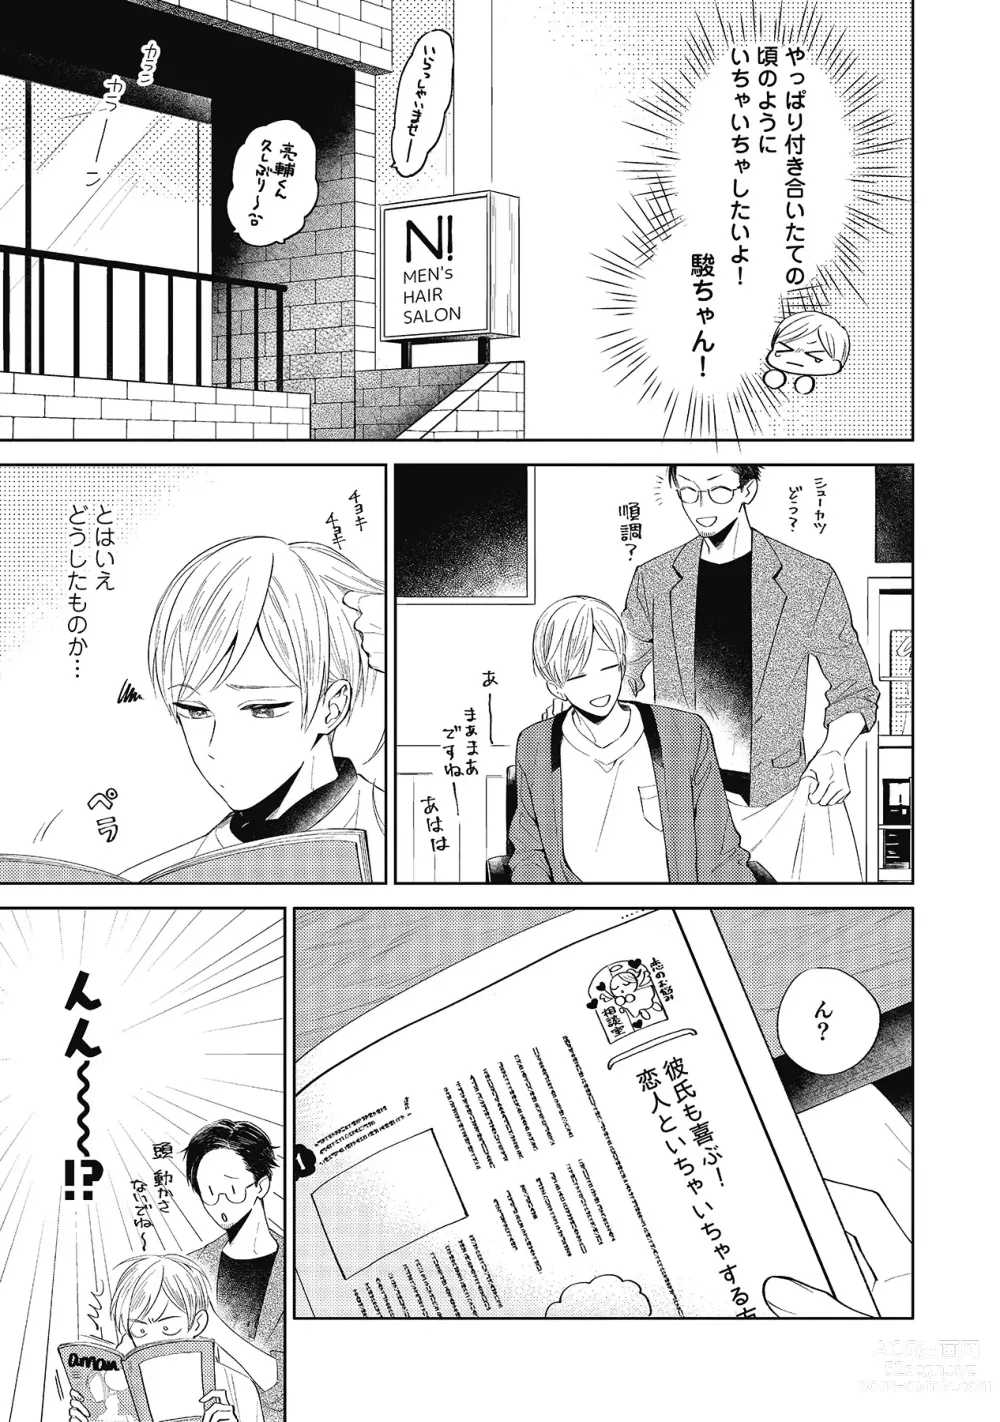 Page 13 of manga Sentimental Darling